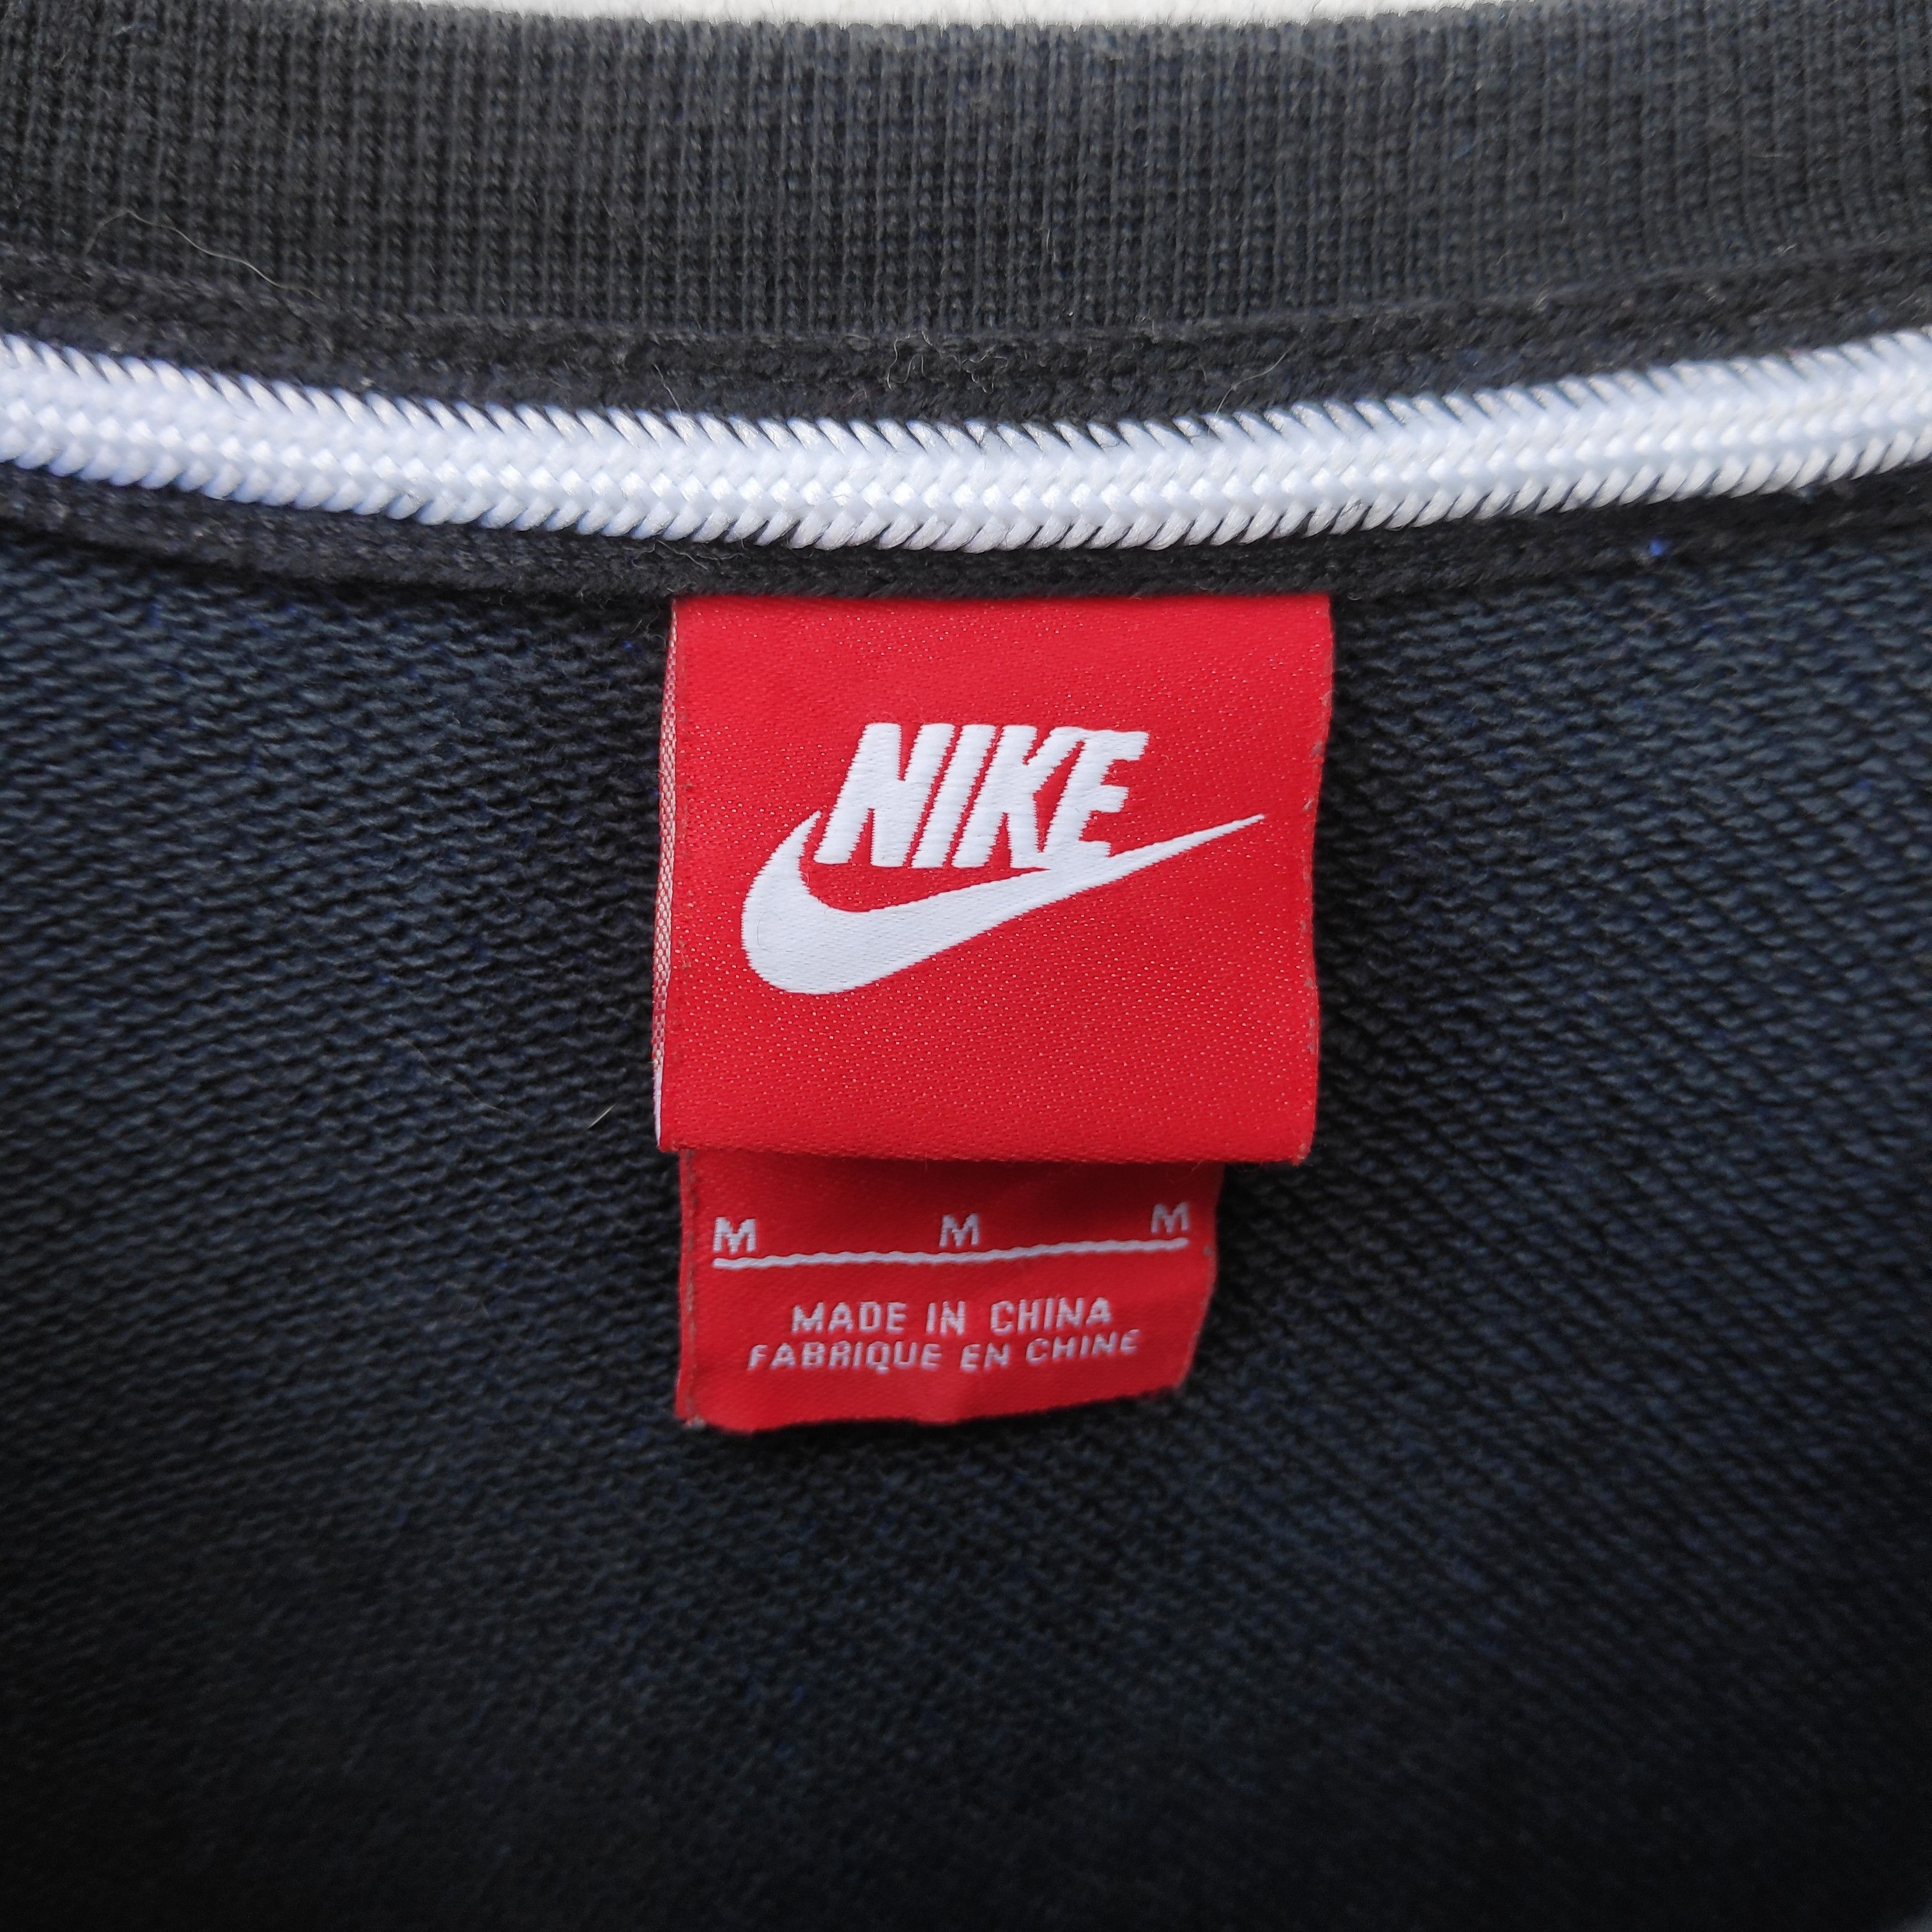 Nike NIKE SWEATSHIRT MEDIUM BLUE PULLOVER JUMPER CREW NECK Size US M / EU 48-50 / 2 - 4 Thumbnail